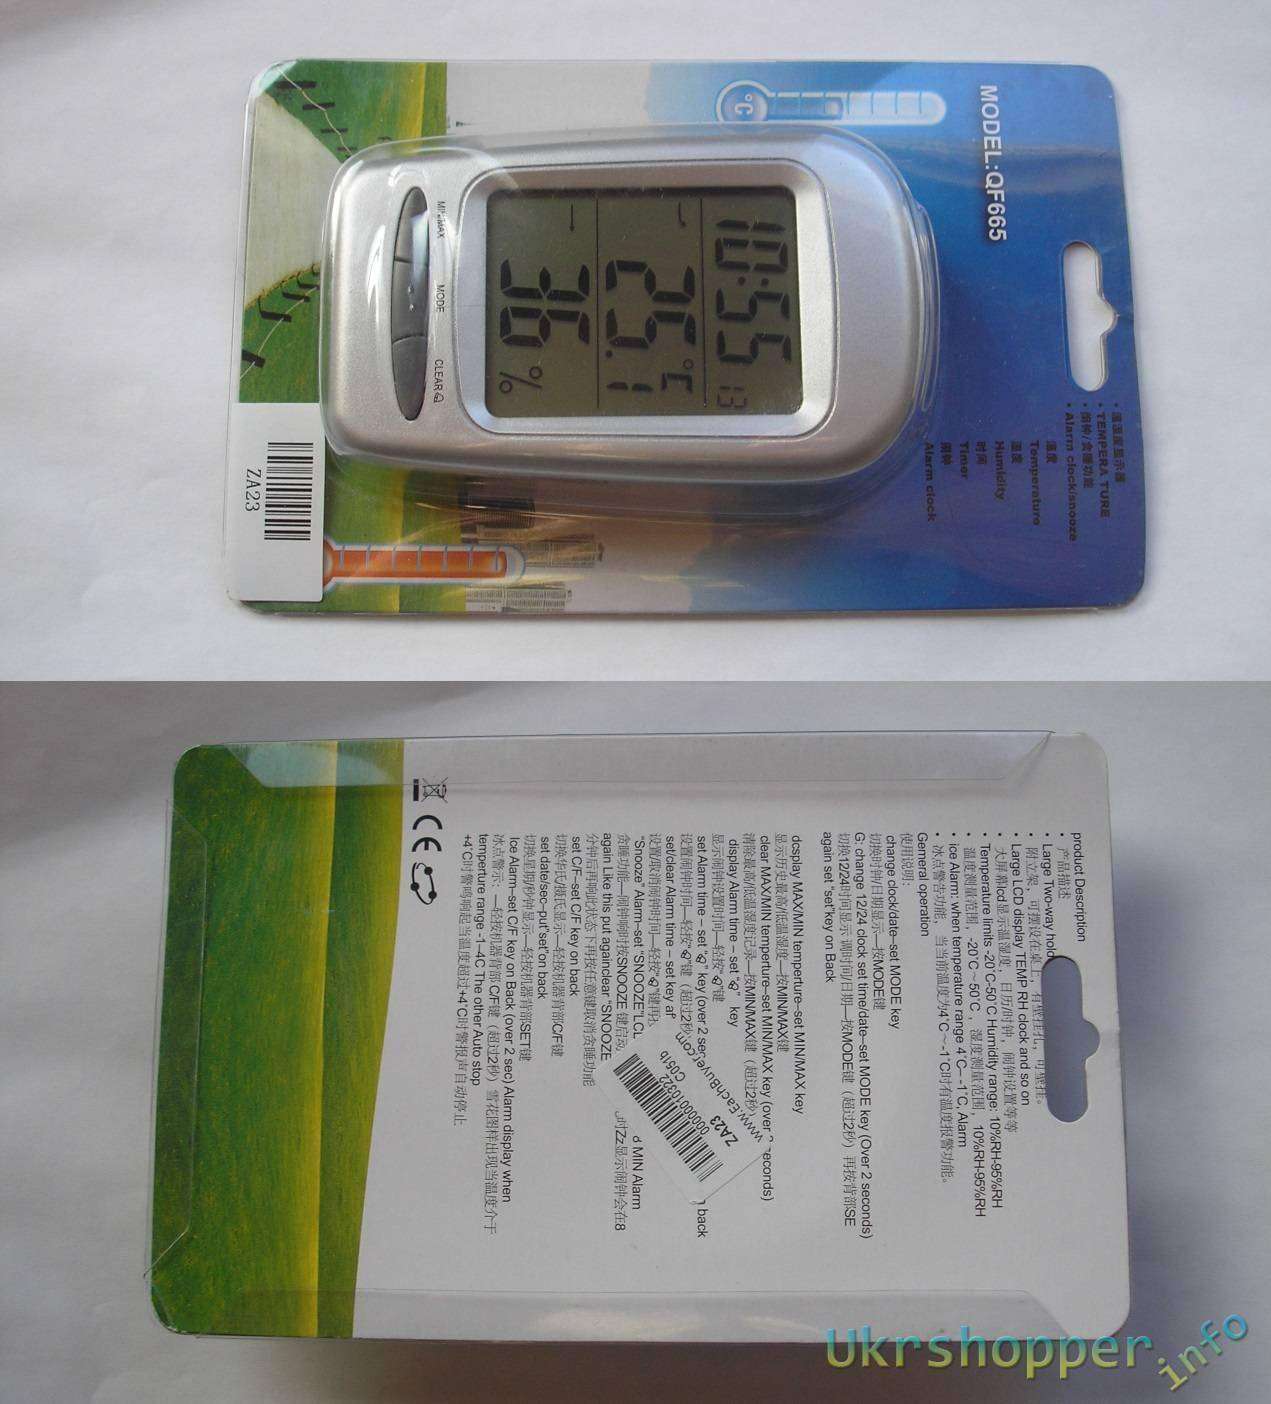 EachBuyer: LCD Digital Термометр, гигрометр, часы, будильник.